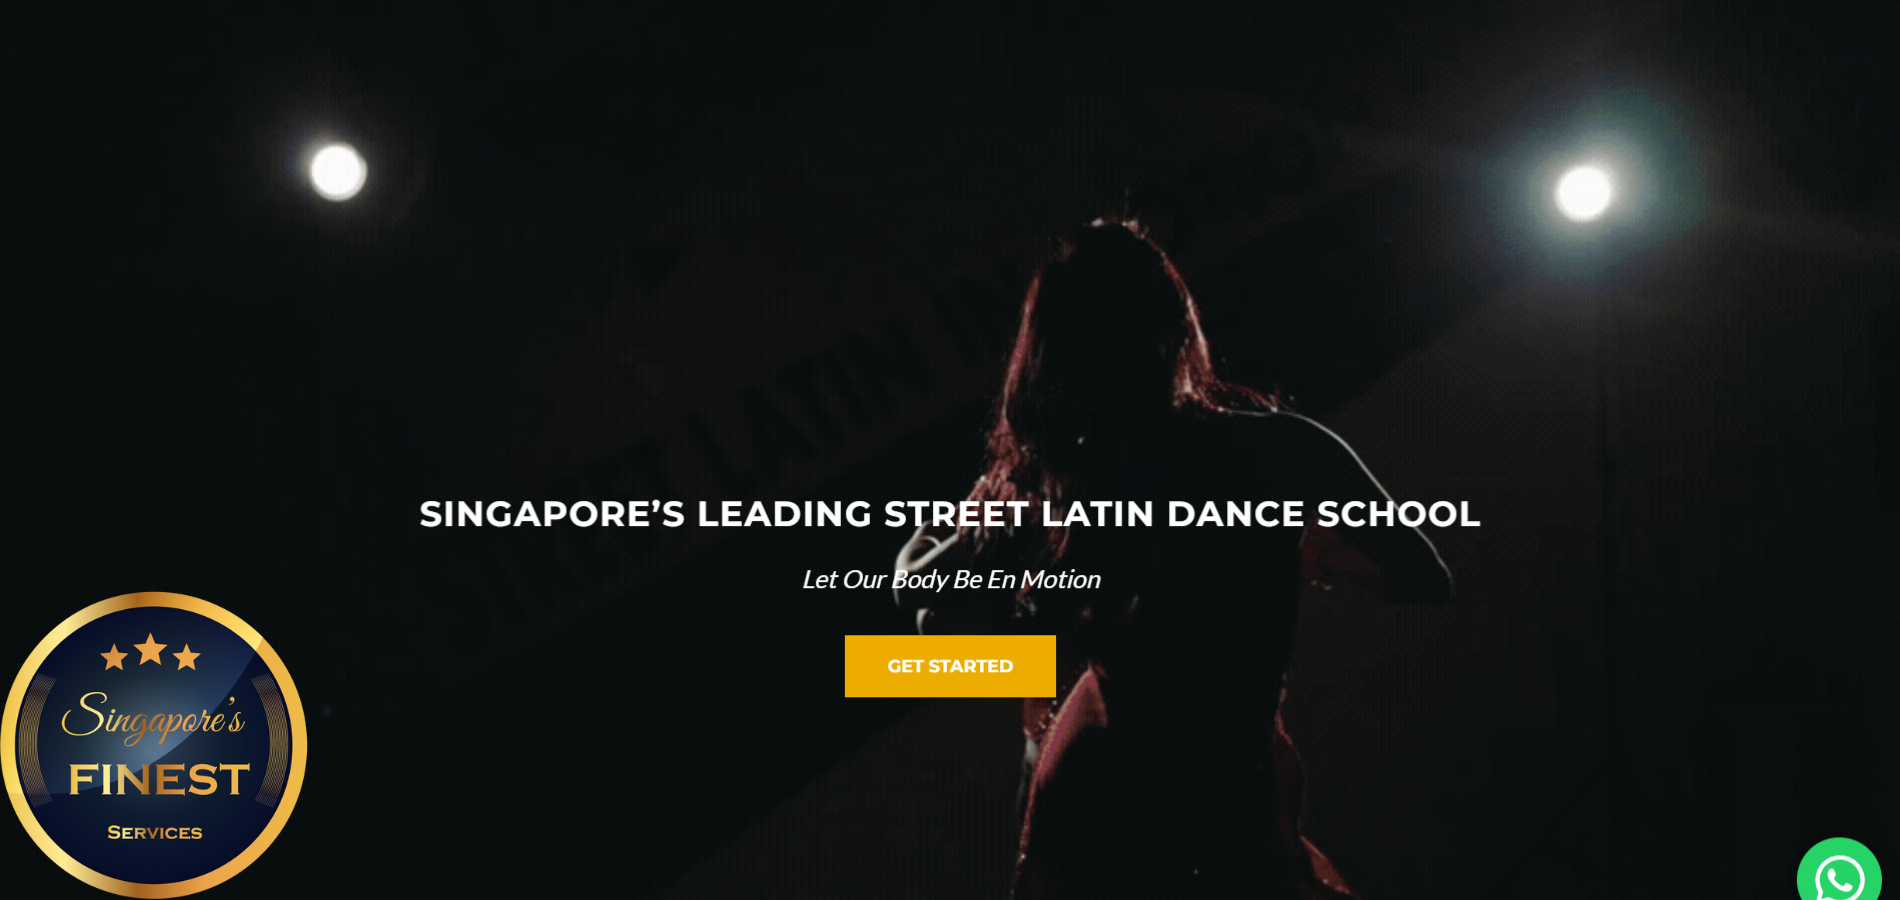 The Finest Dance Studios in Singapore